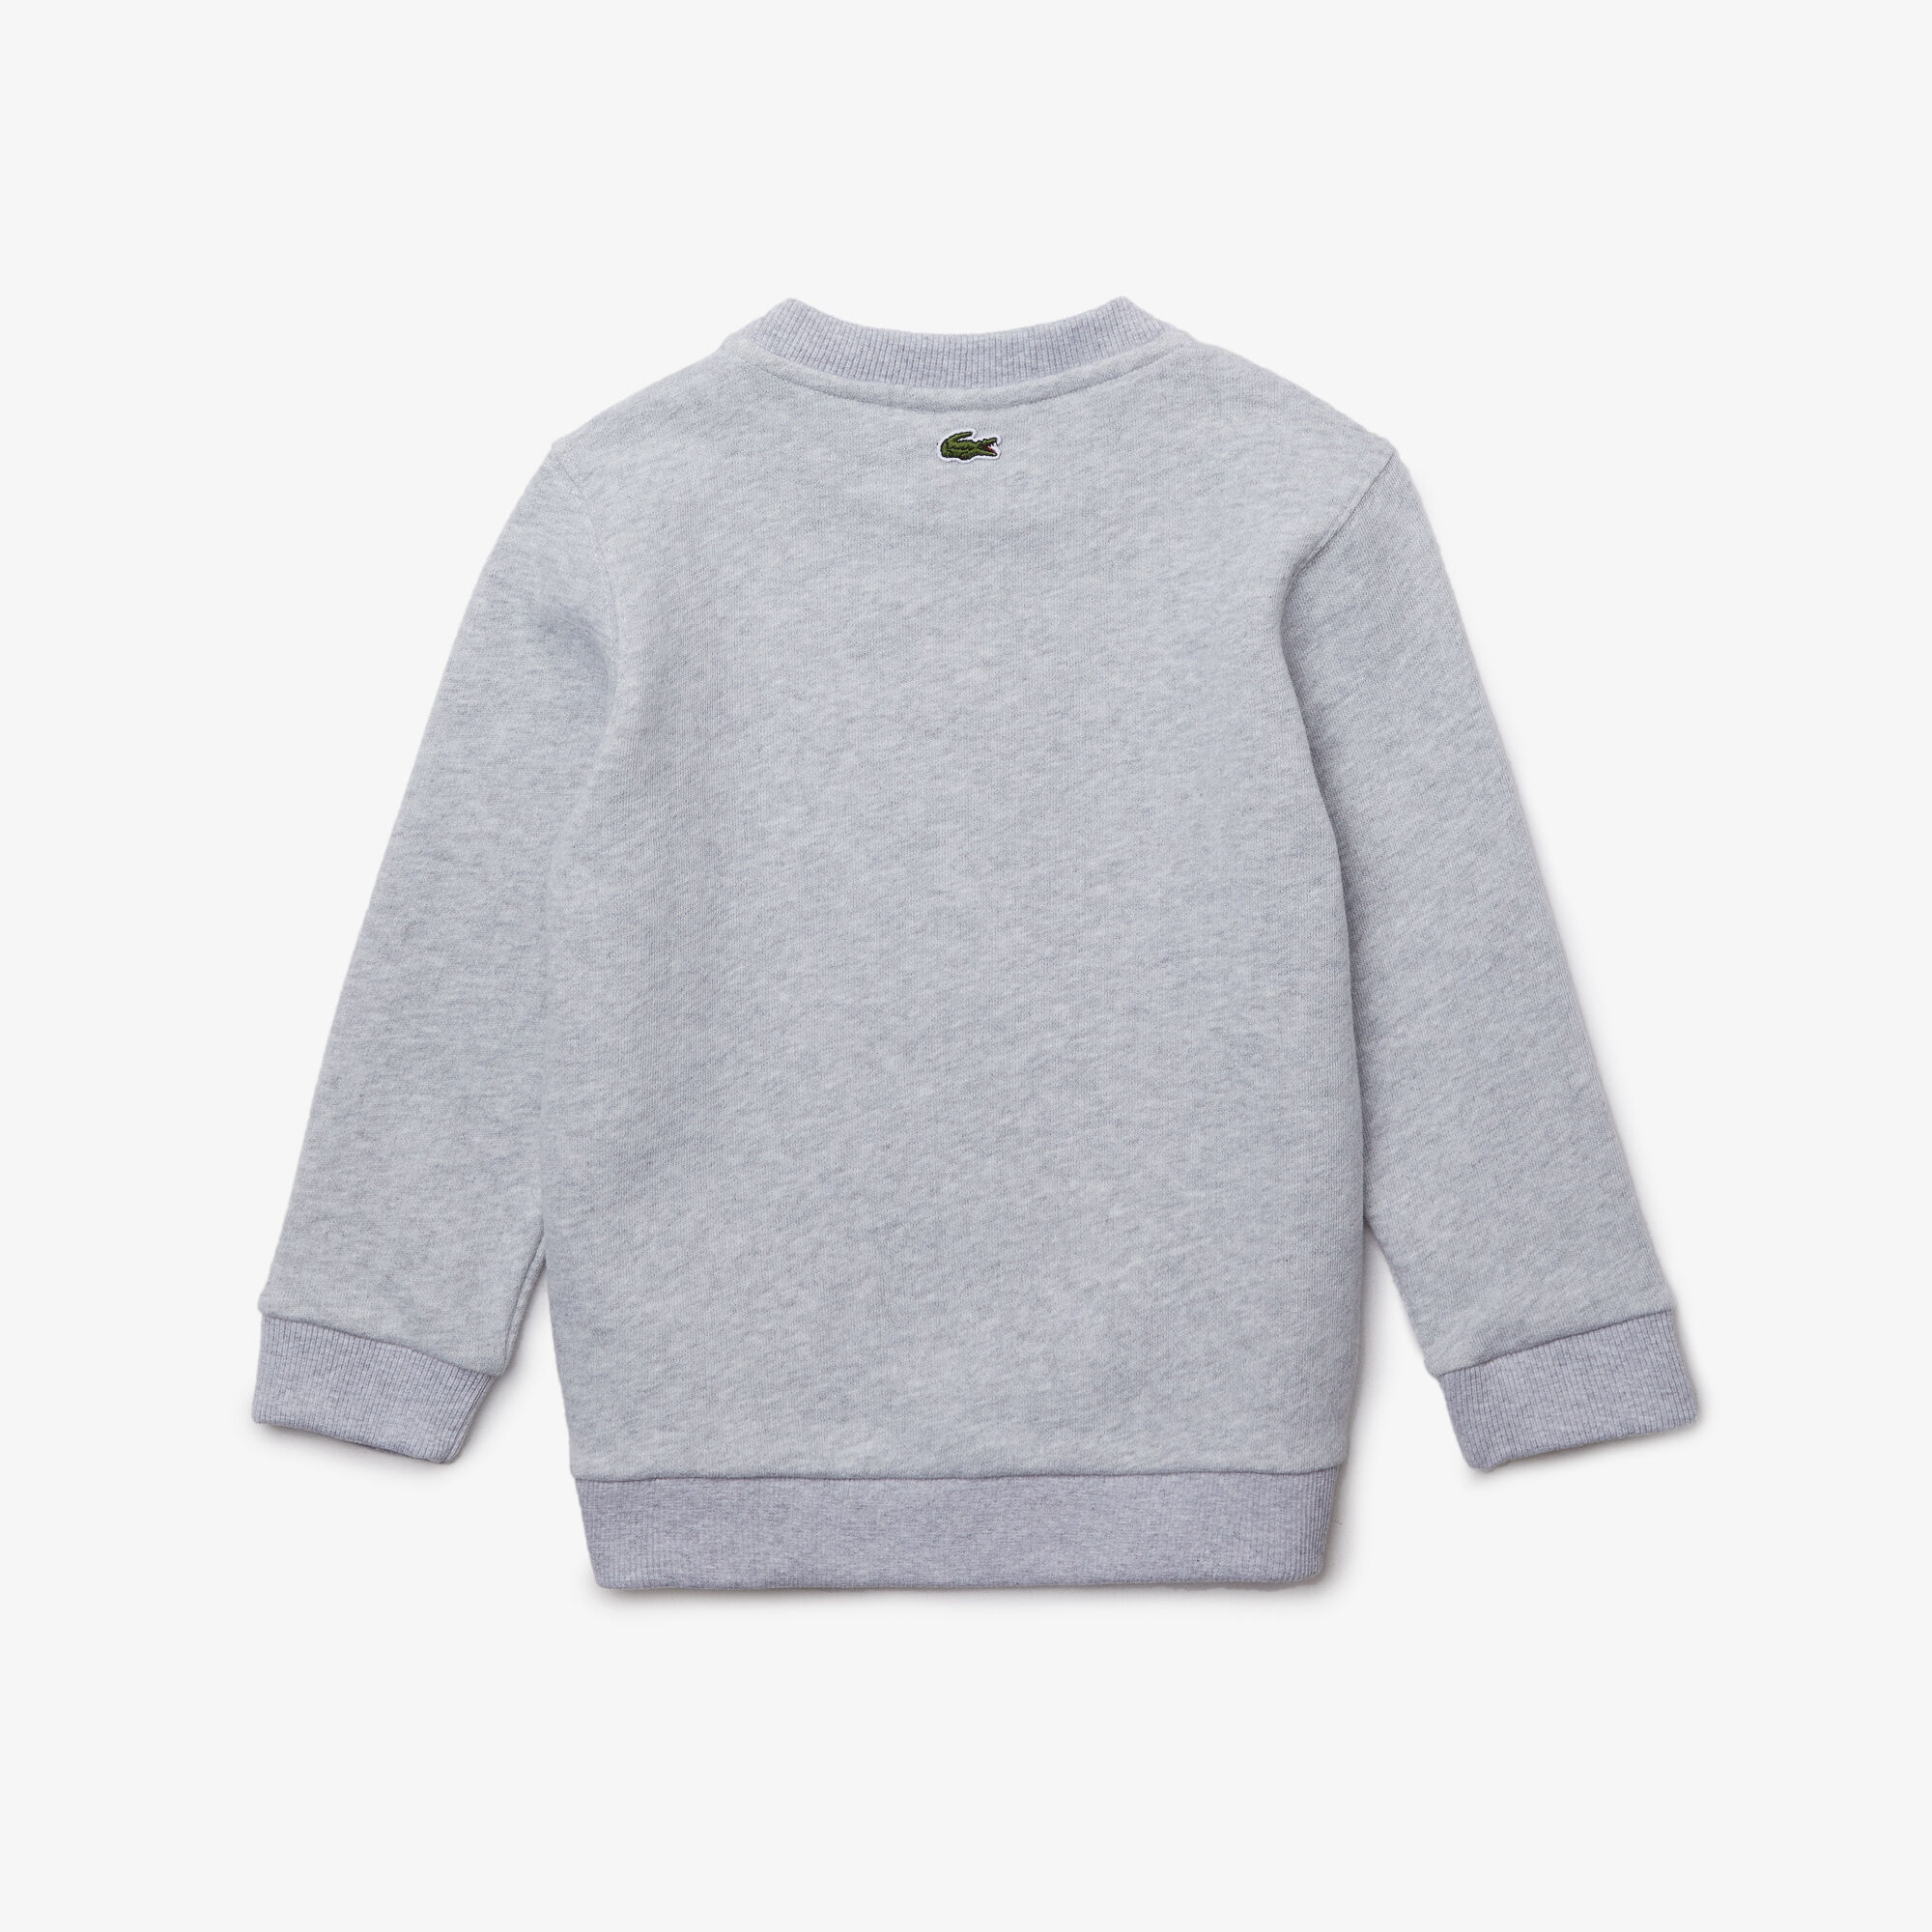 Boys’ Crew Neck Fun Crocodile Design Cotton Sweatshirt